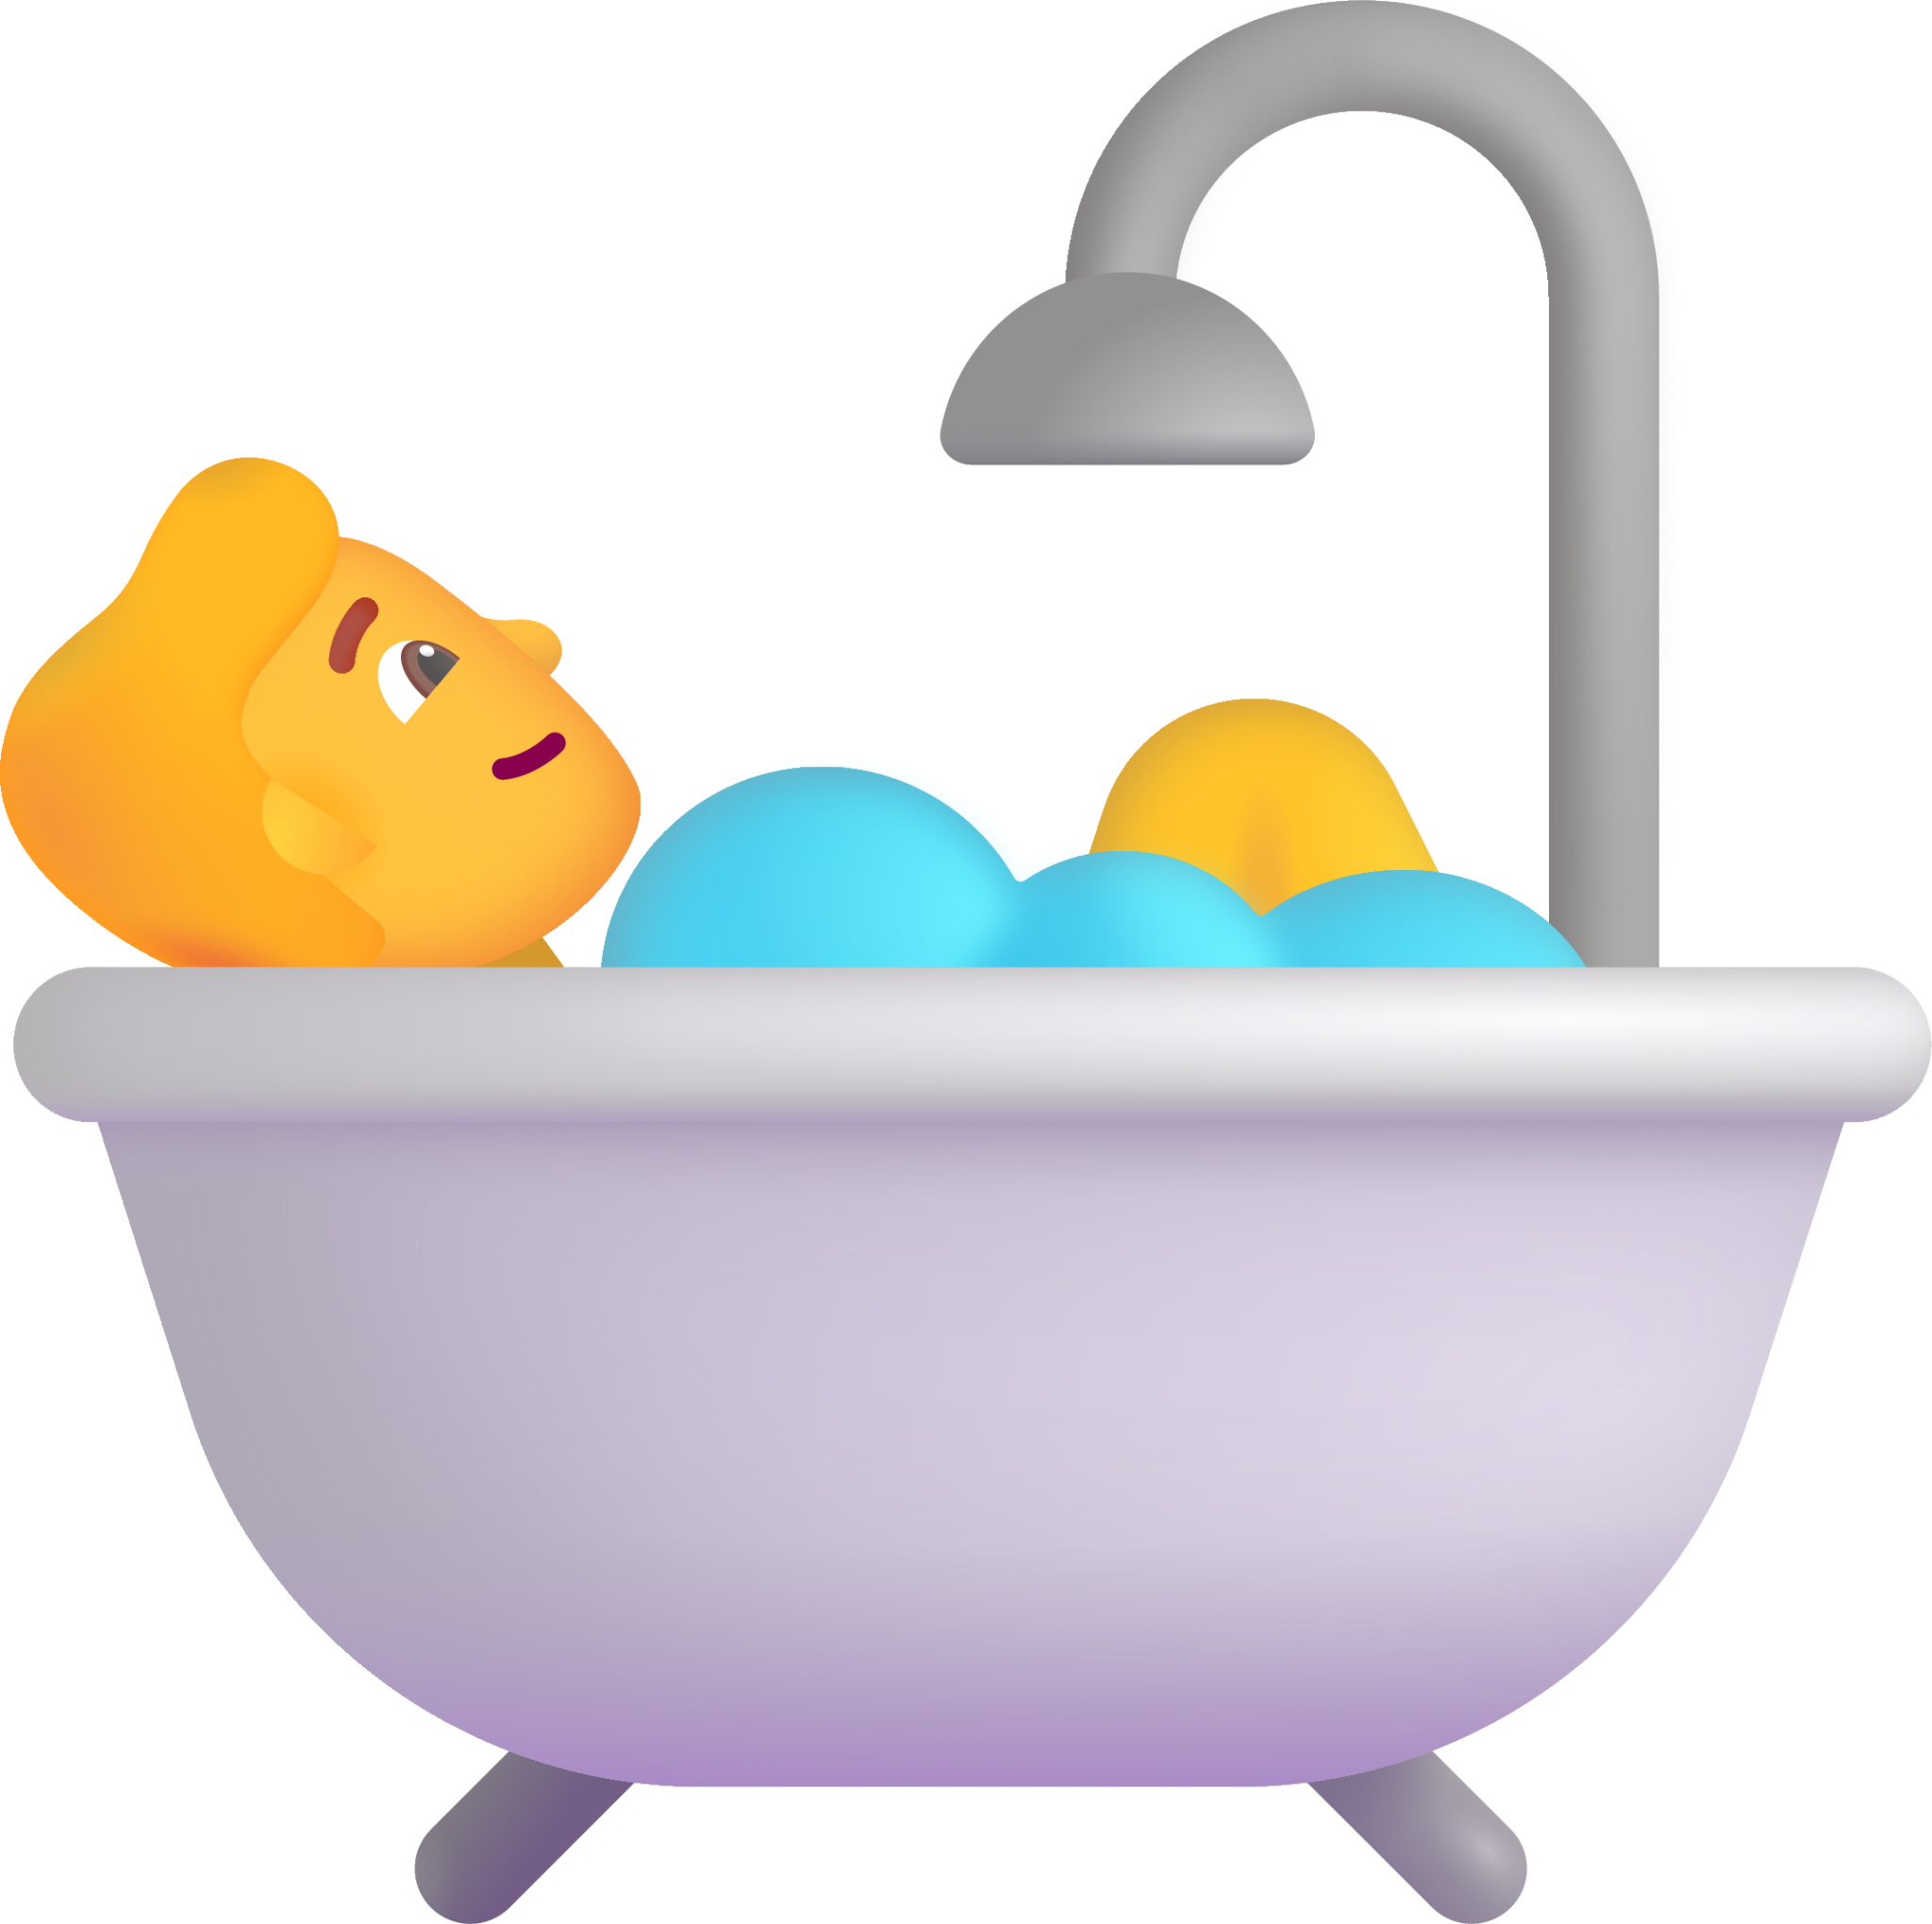 person taking bath default emoji